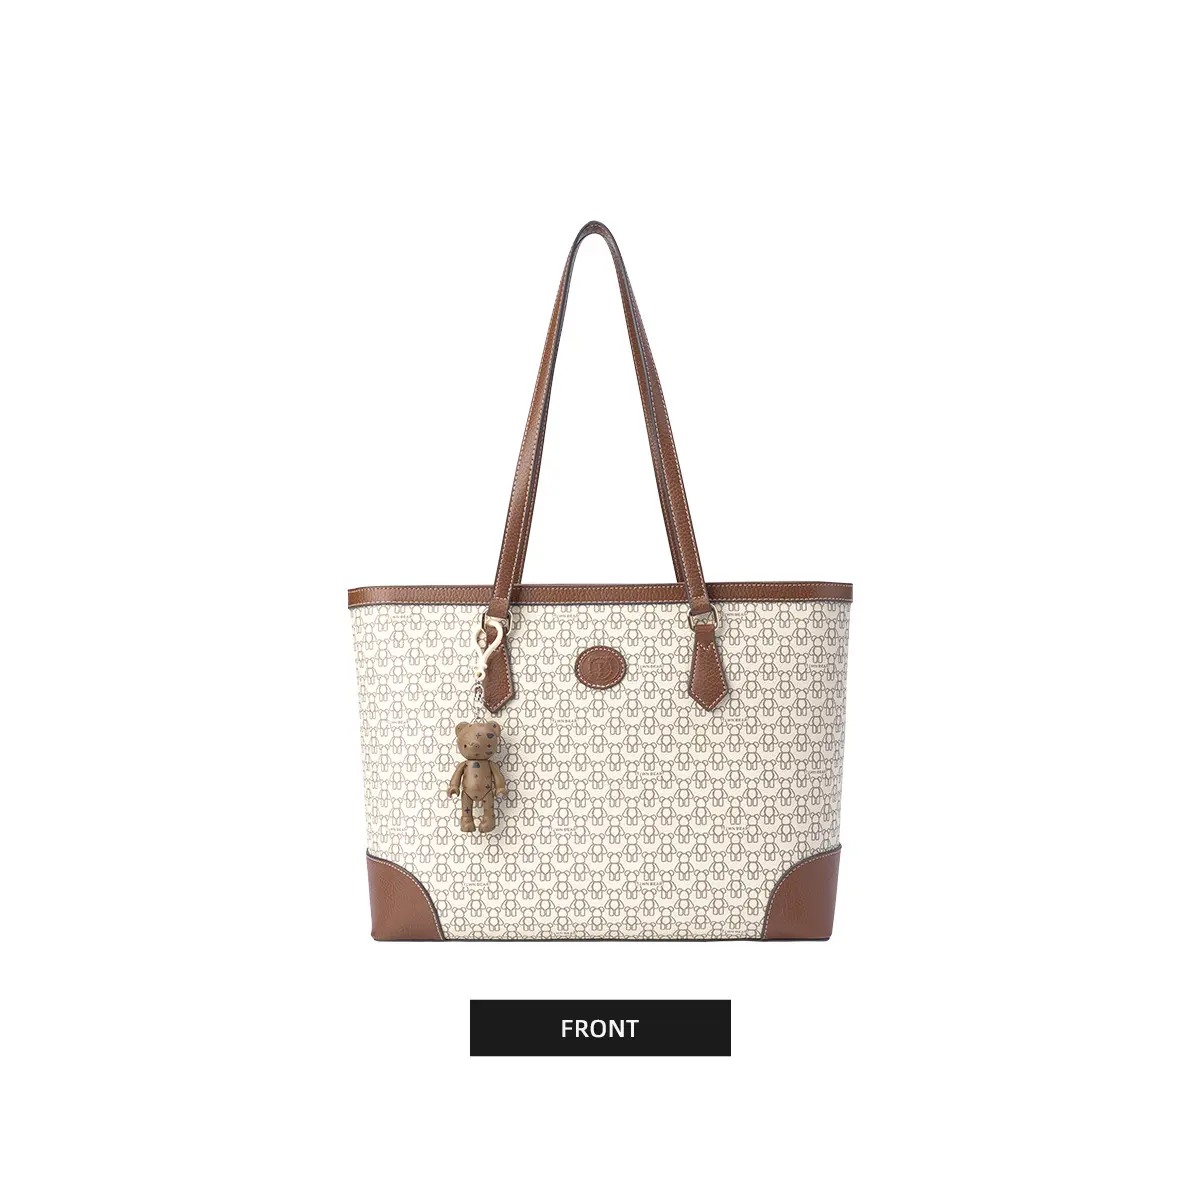 TTWNBEAR luxury handbags name brand purses and ladies handbags handbags for women luxury custom logo